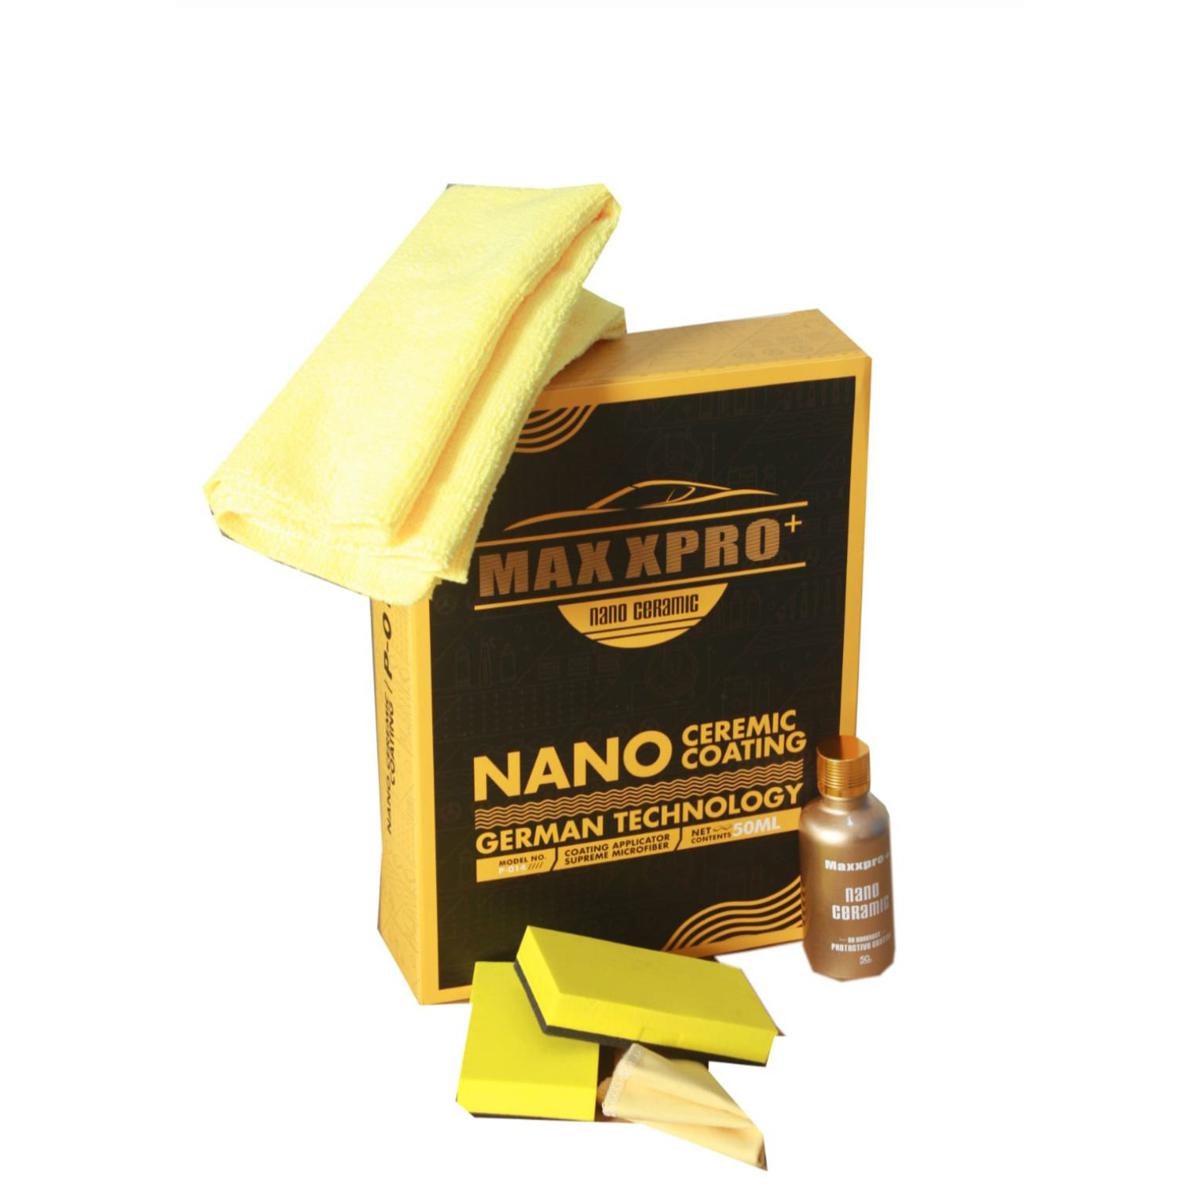 MAXPRO+Nano Ceramic Coating (German Technology)